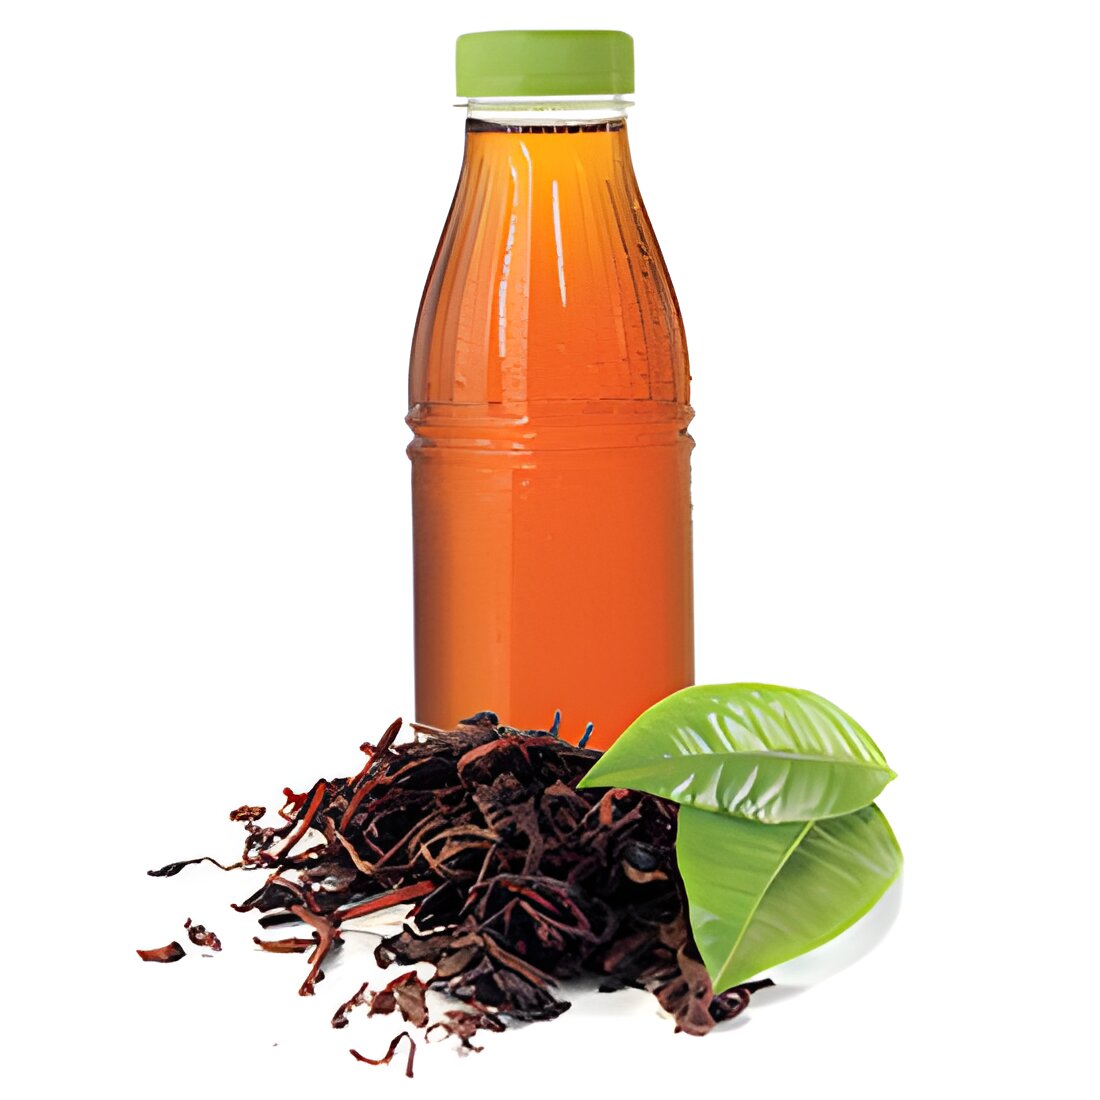 Free Amelia Bay All-Natural Brewed Tea Samples